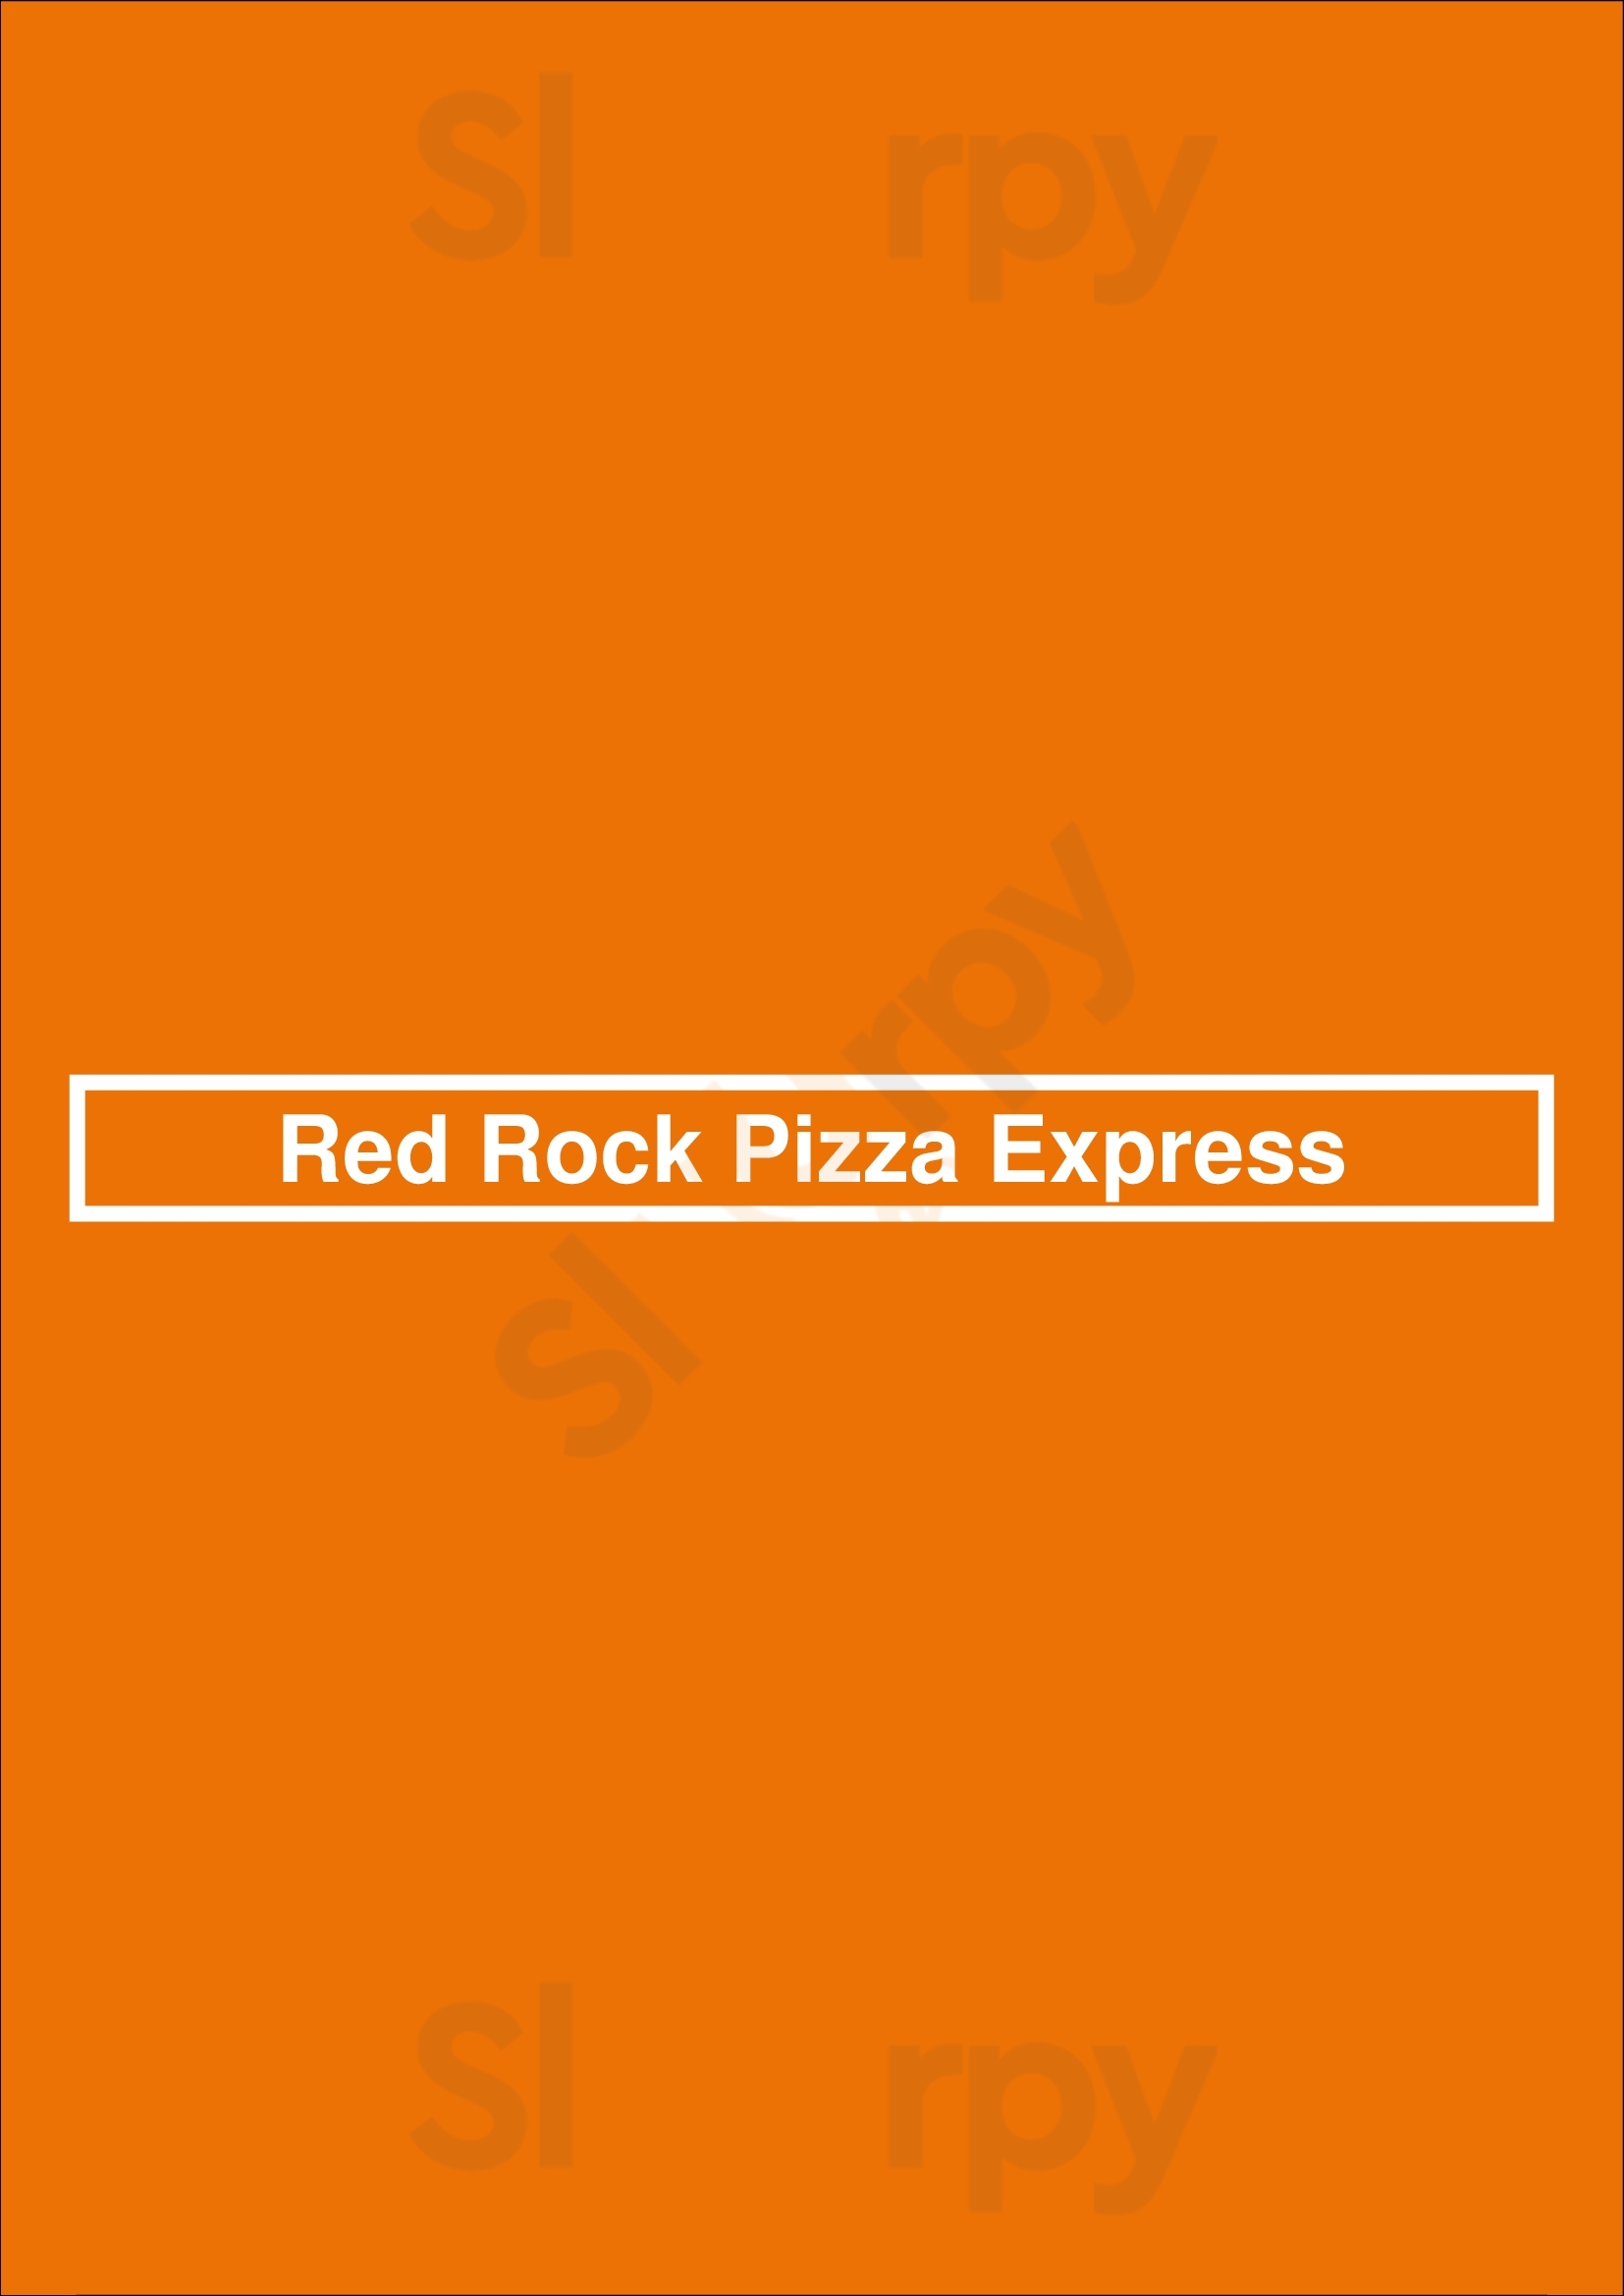 Red Rock Pizza Express Calgary Menu - 1